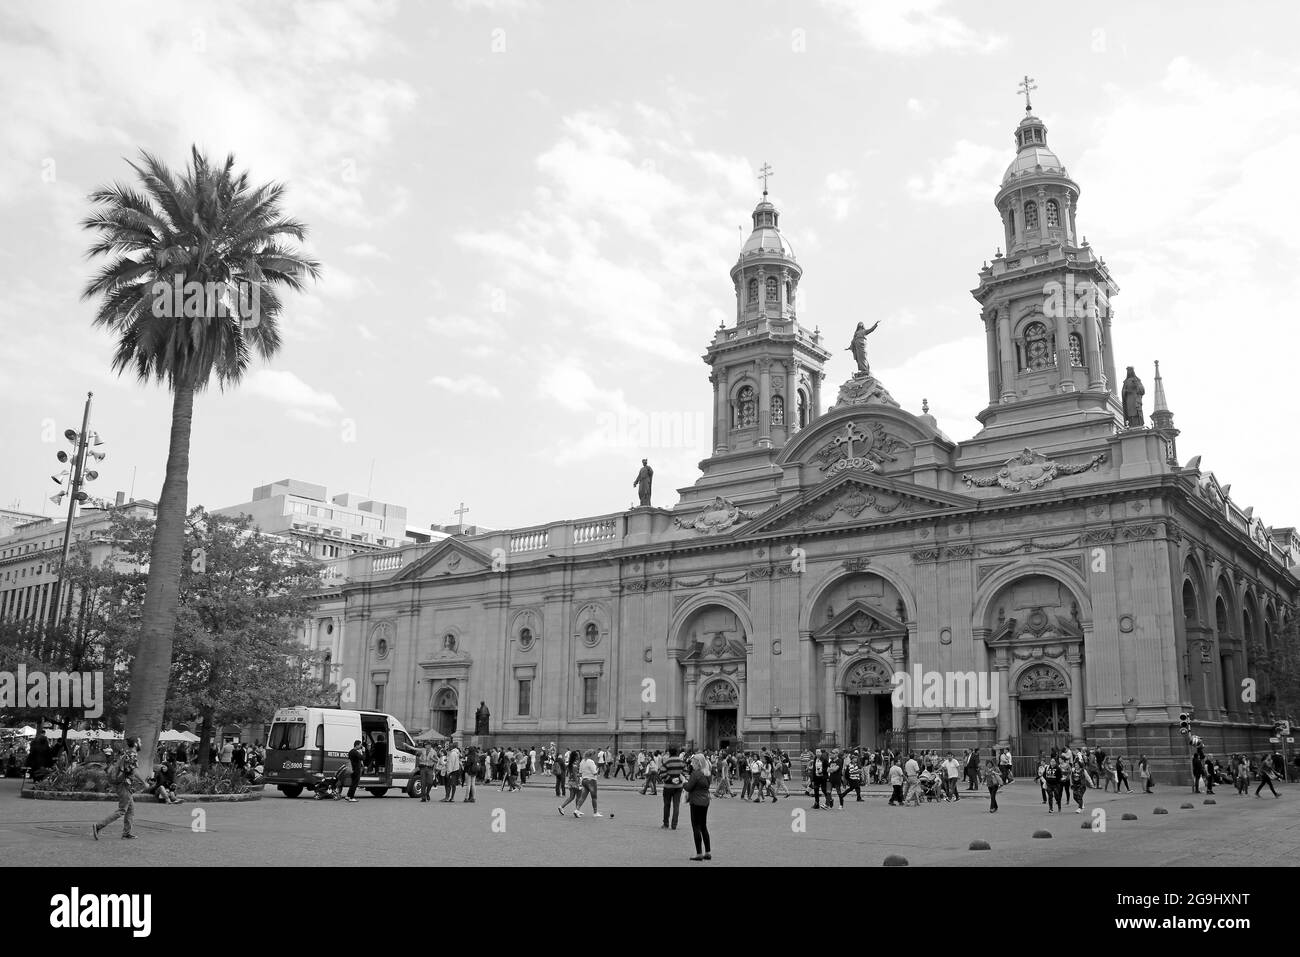 The Metropolitan Cathedral of Santiago, Amazing Landmark on Plaza de Armas Square of Santiago, Chile in Monochrome Stock Photo